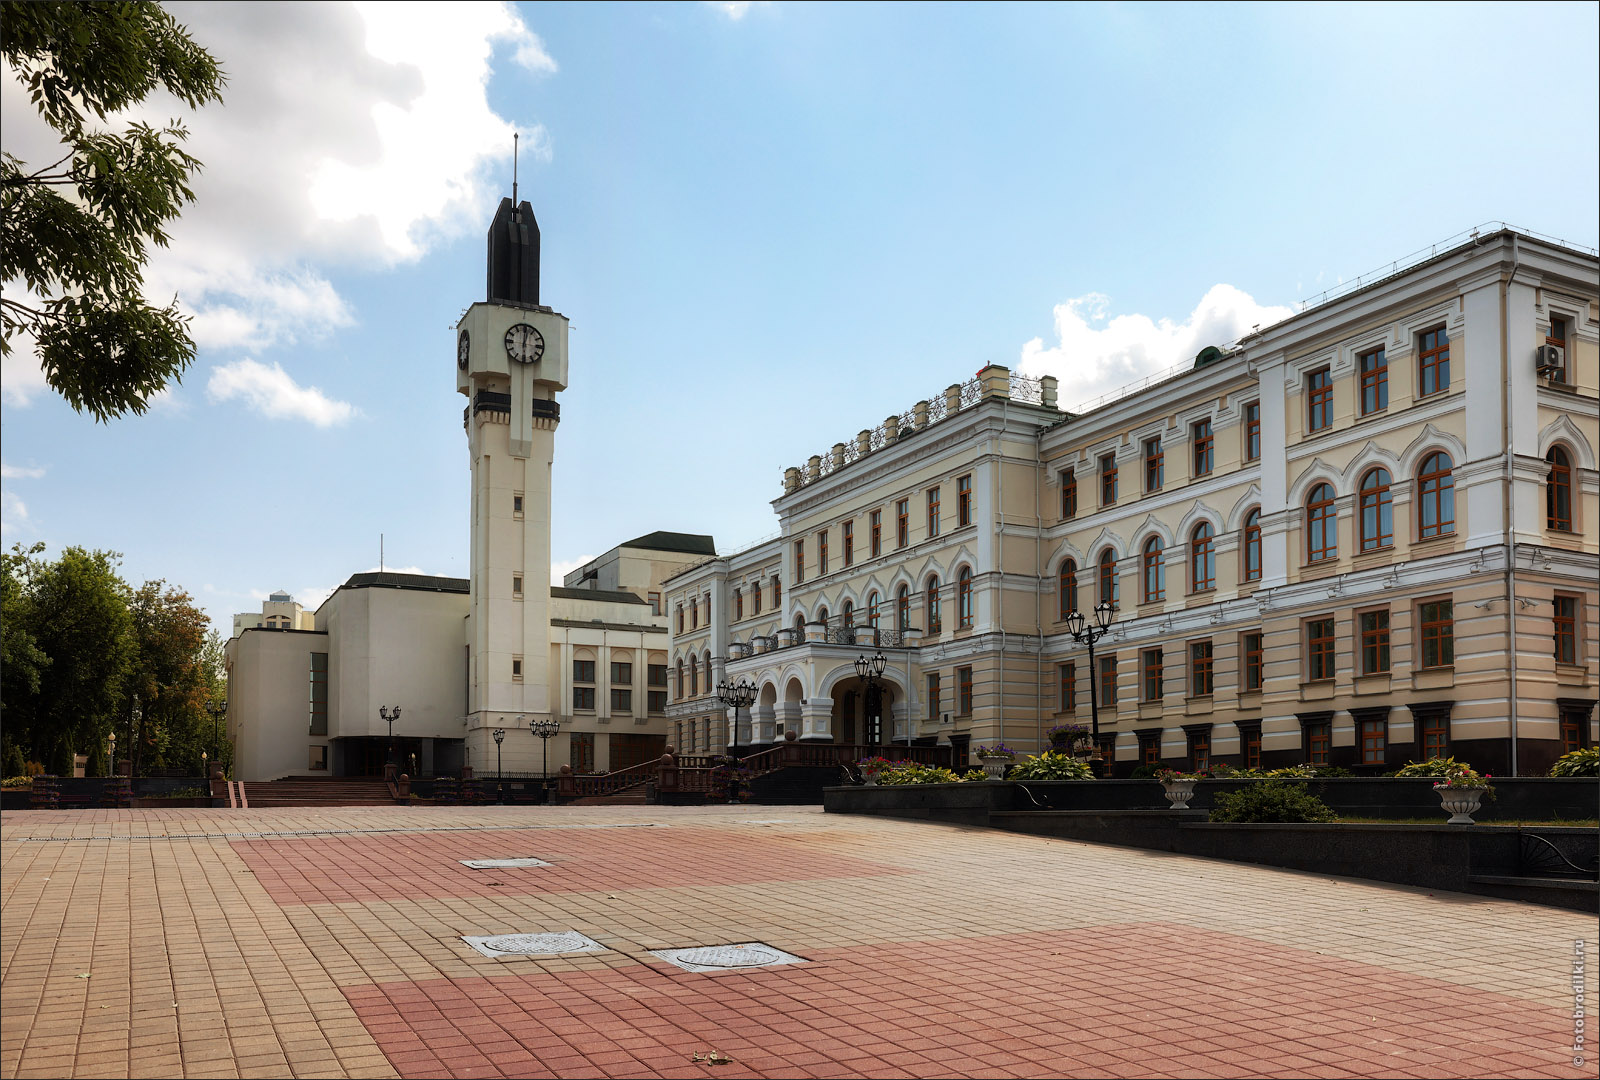 Башня с часами, Витебск, Беларусь